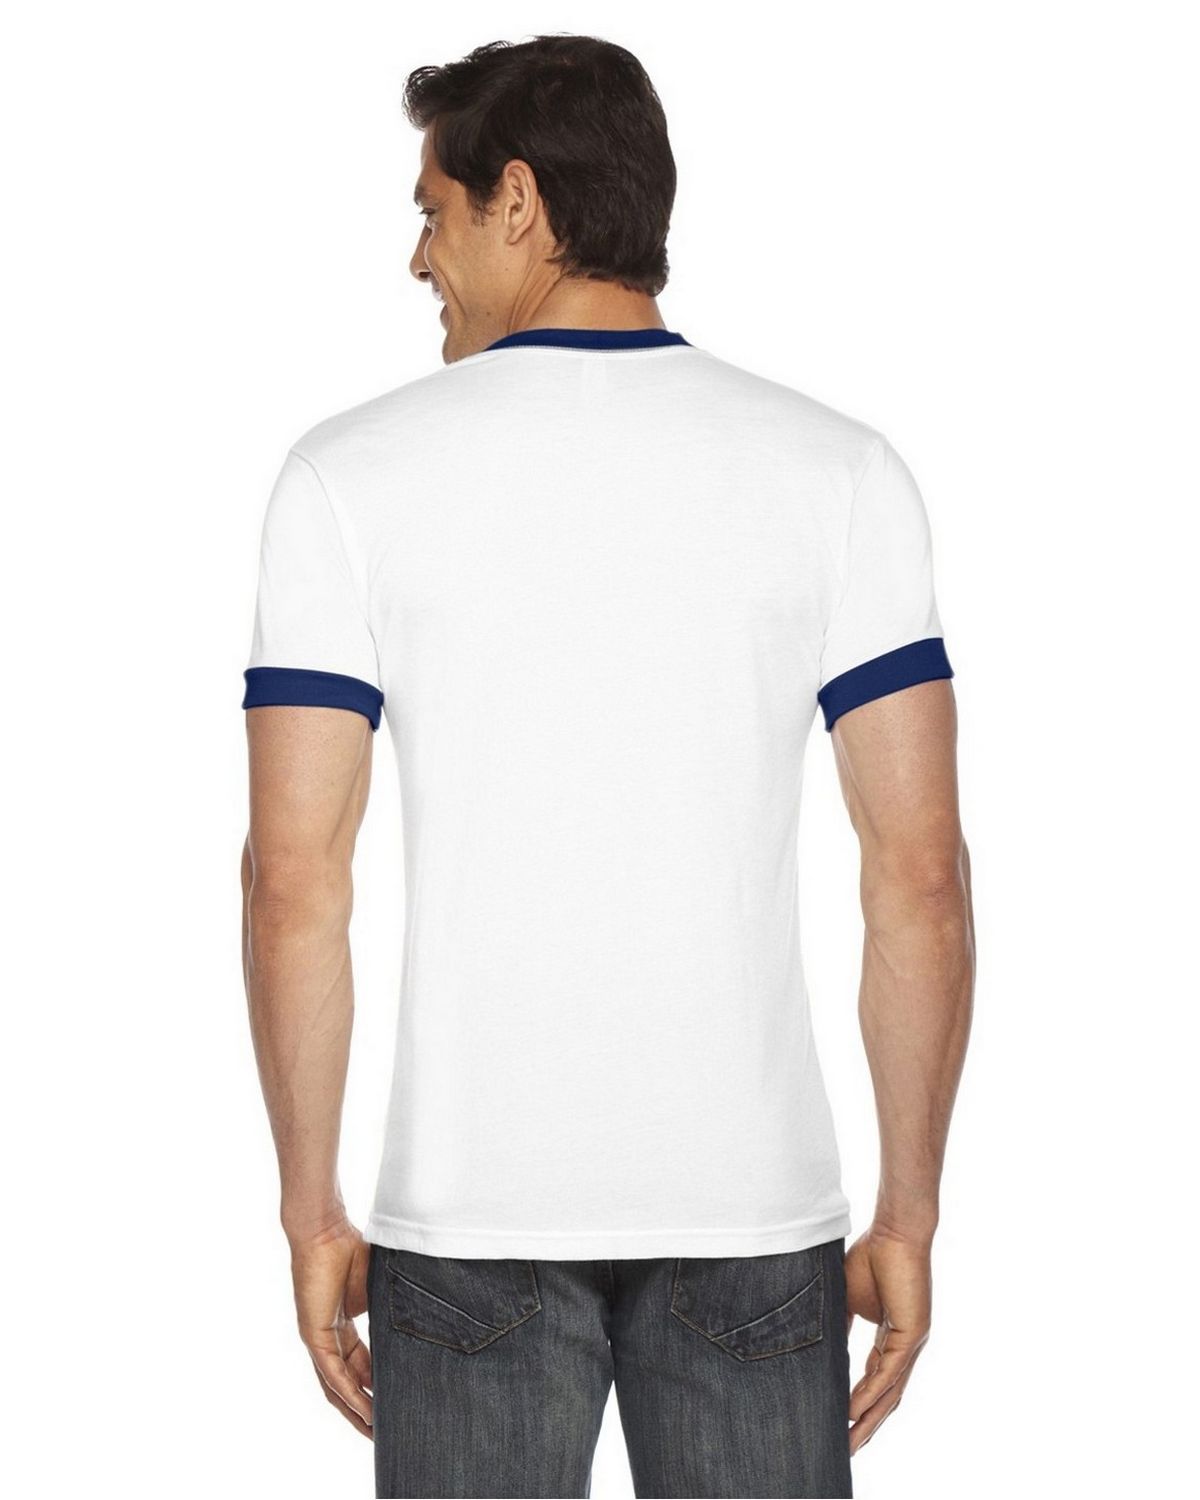 American Apparel BB410 Unisex Poly-Cotton Short-Sleeve Ringer T-Shirt ...